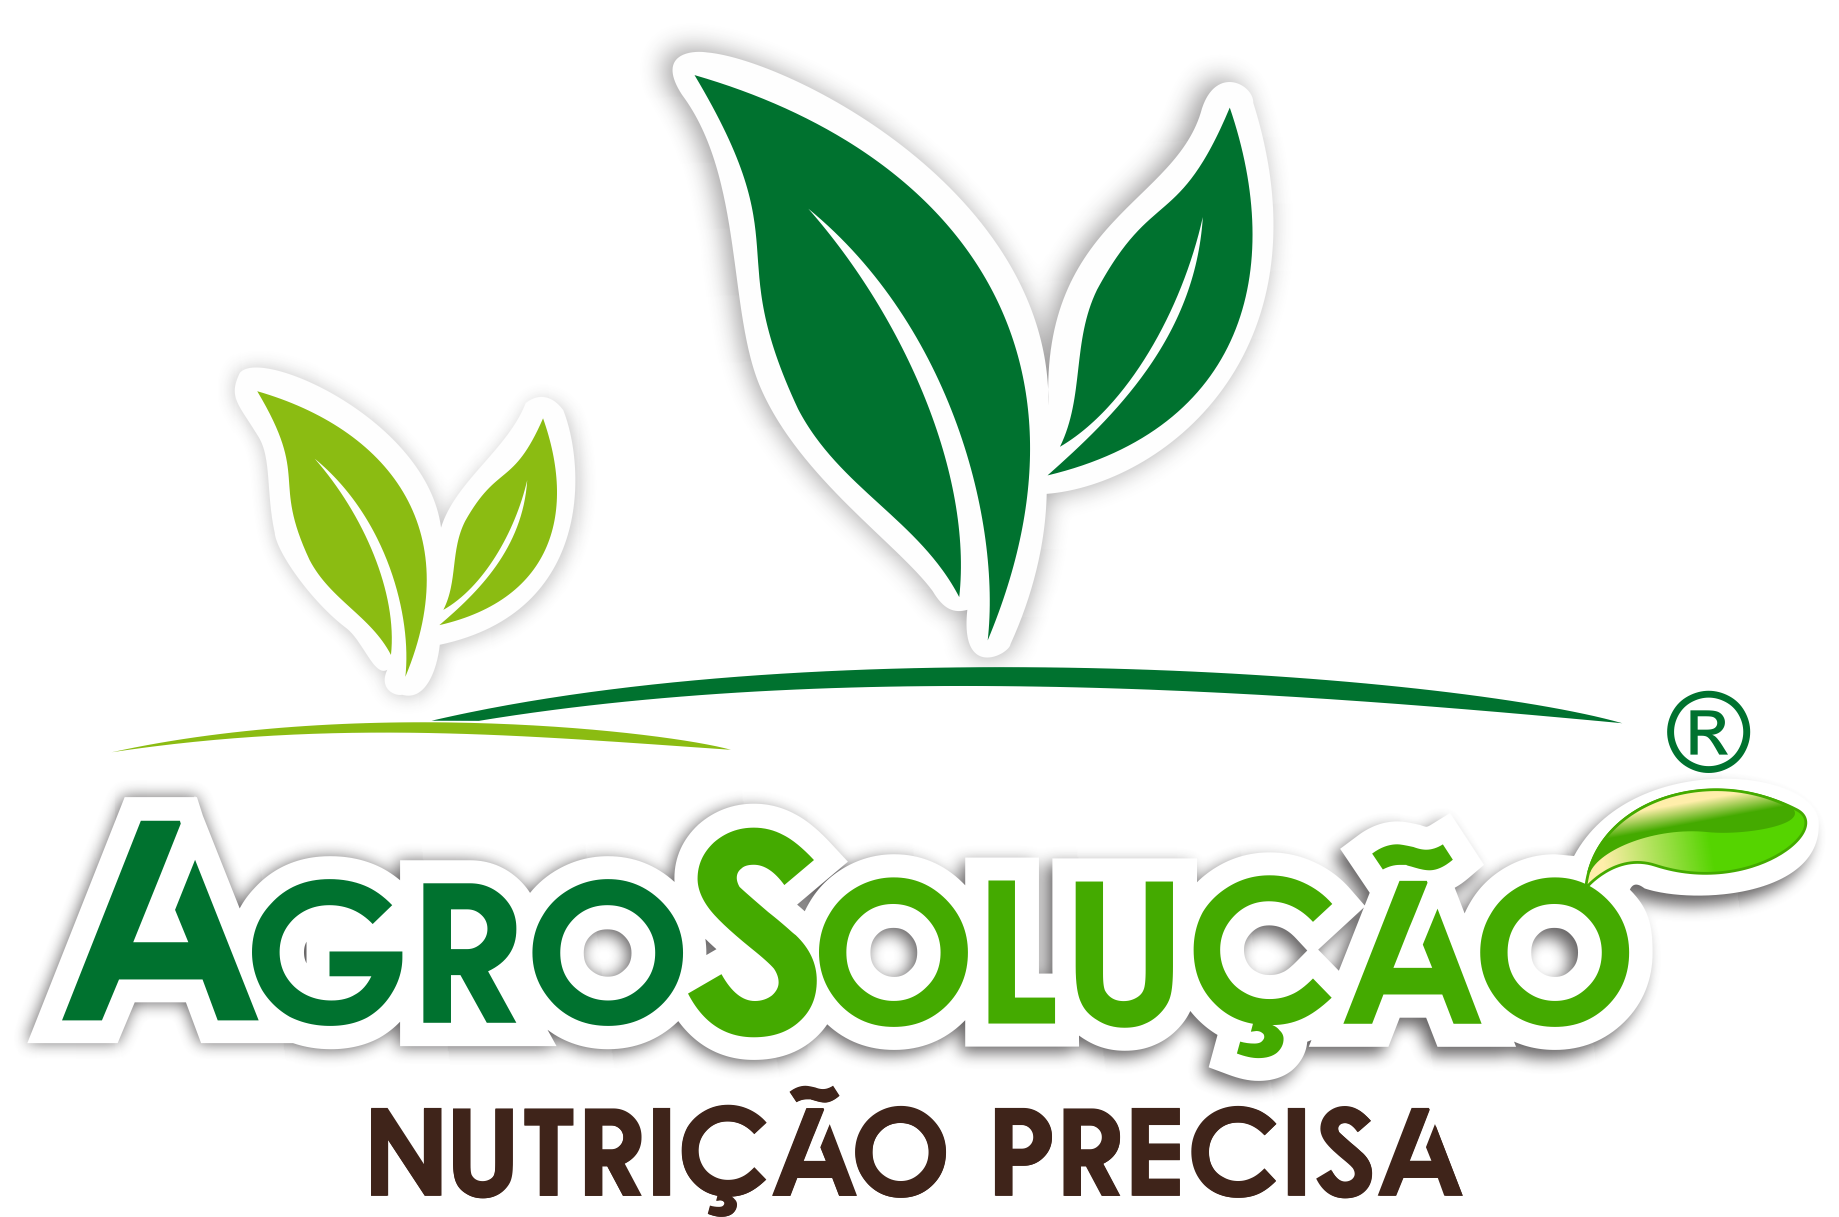 agrosolucao_logo_slogan